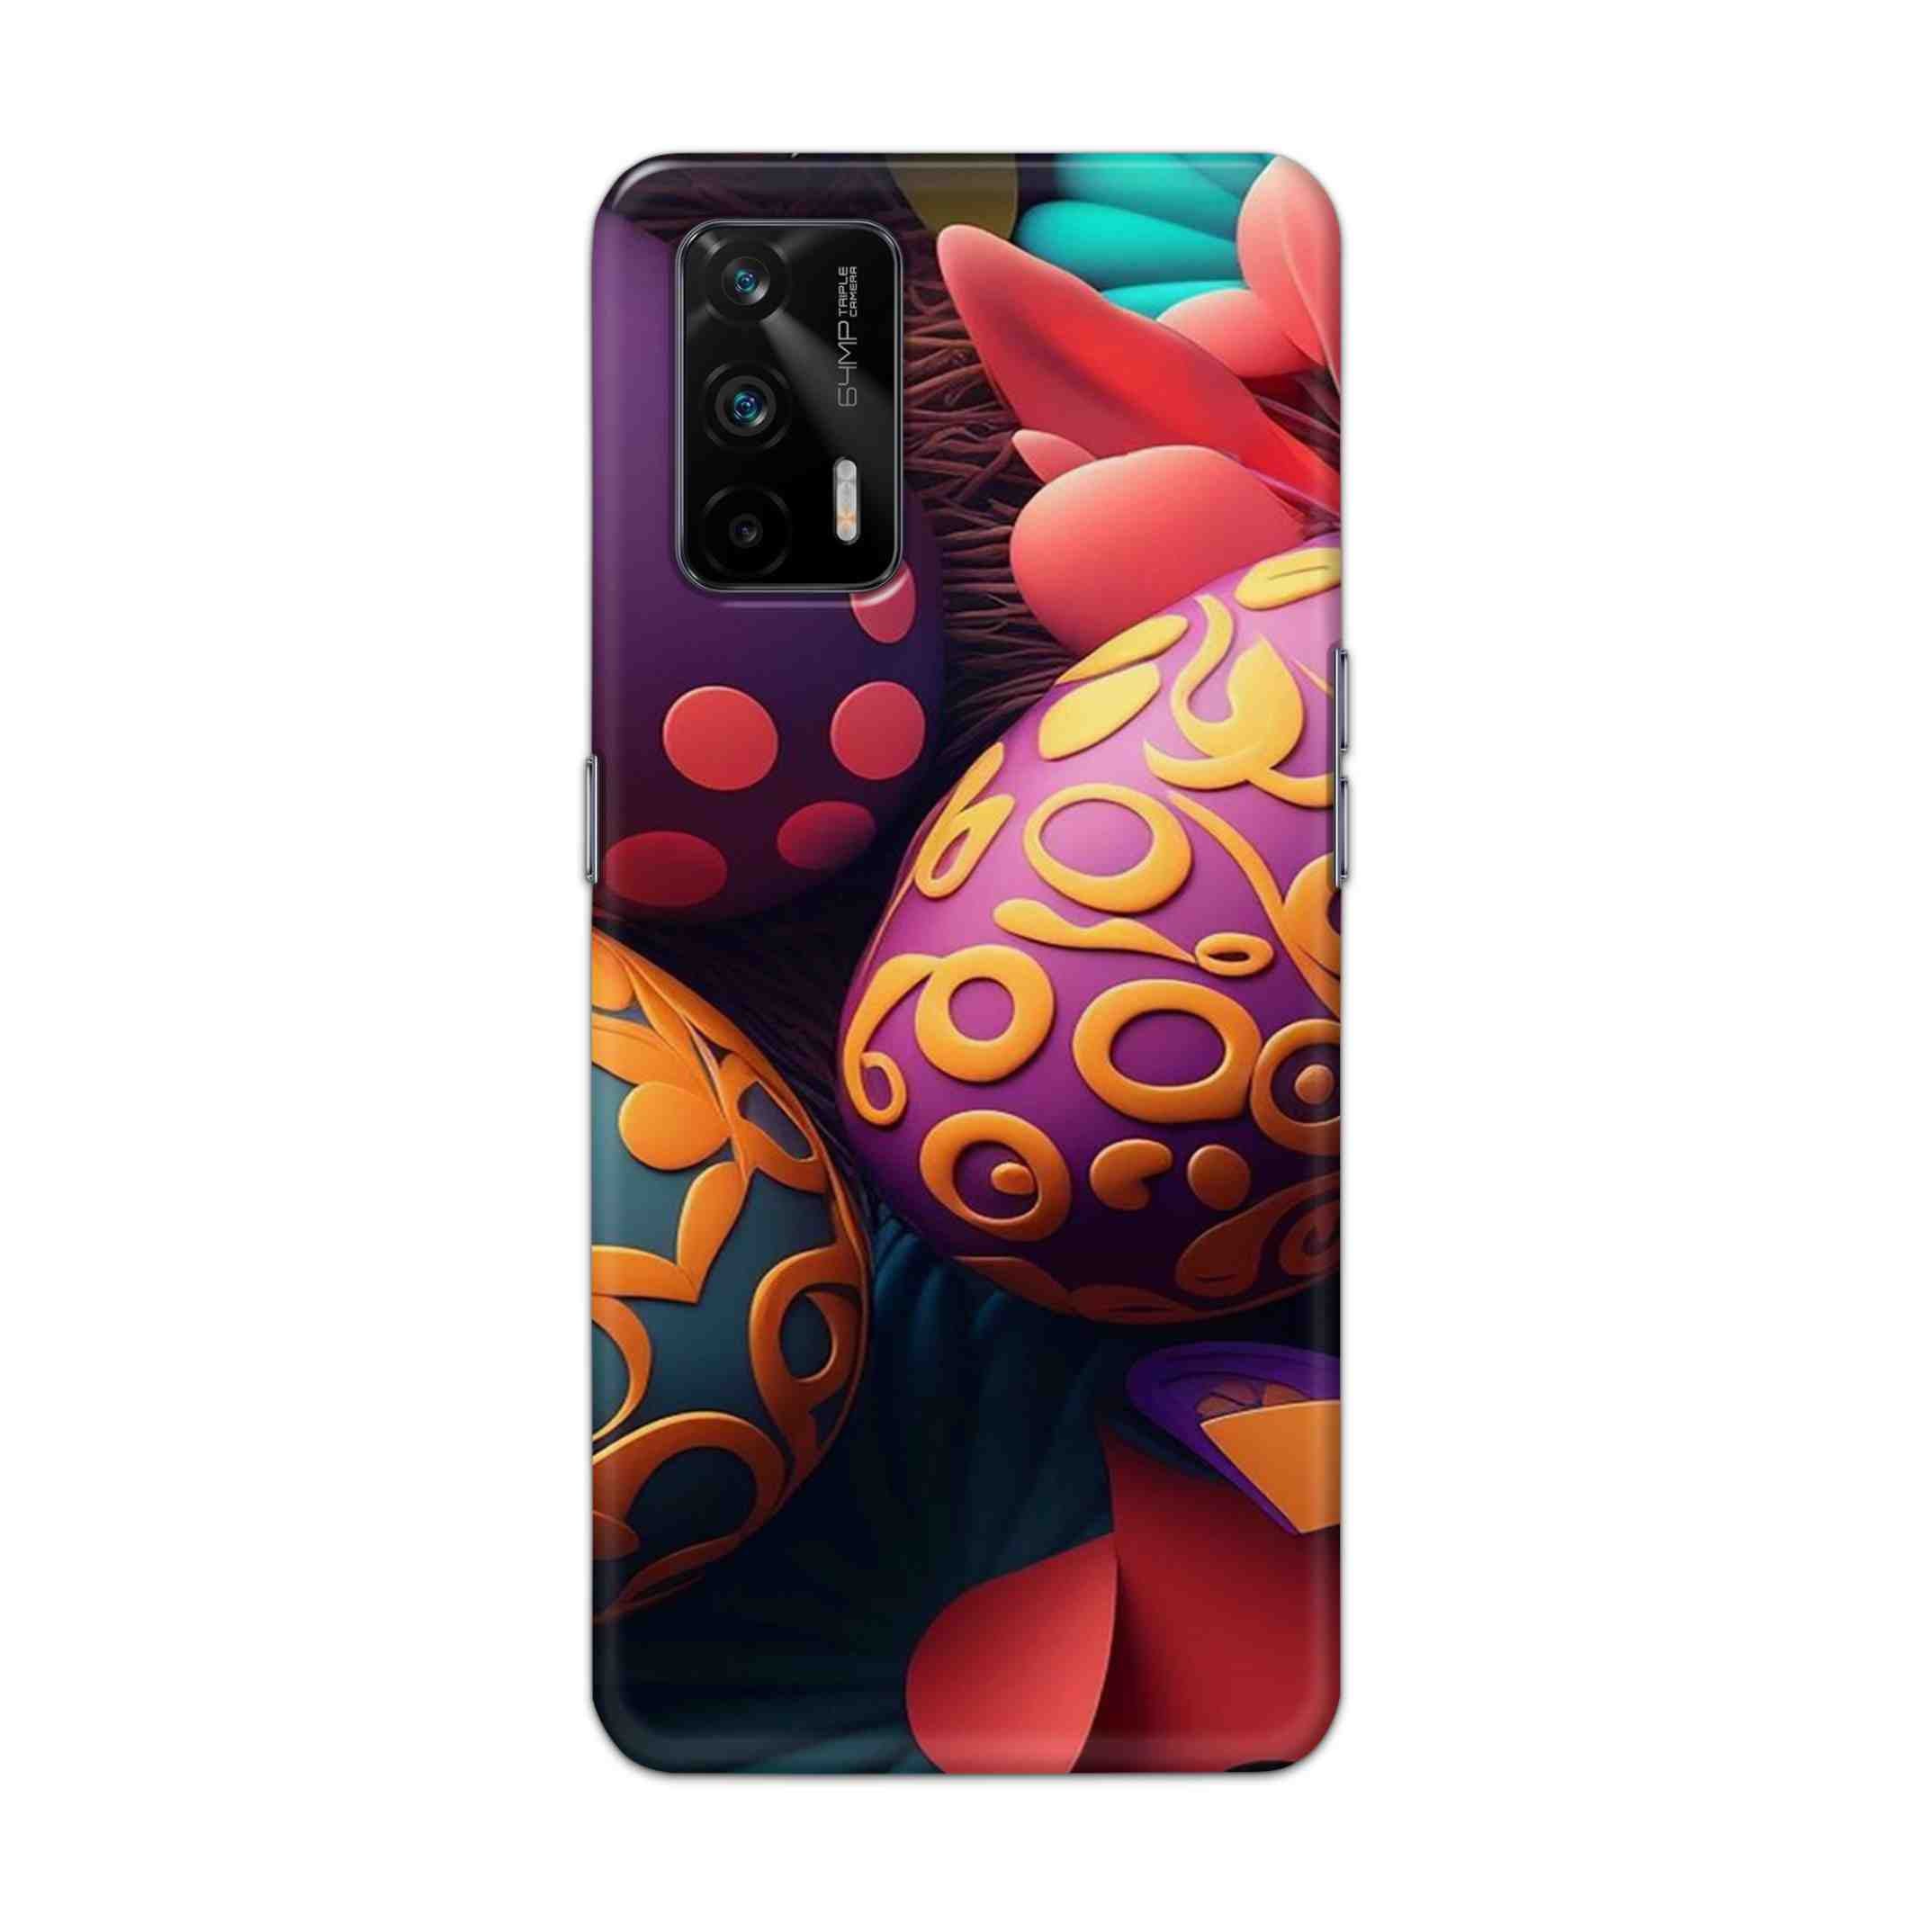 Buy Easter Egg Hard Back Mobile Phone Case Cover For Realme X7 Max Online